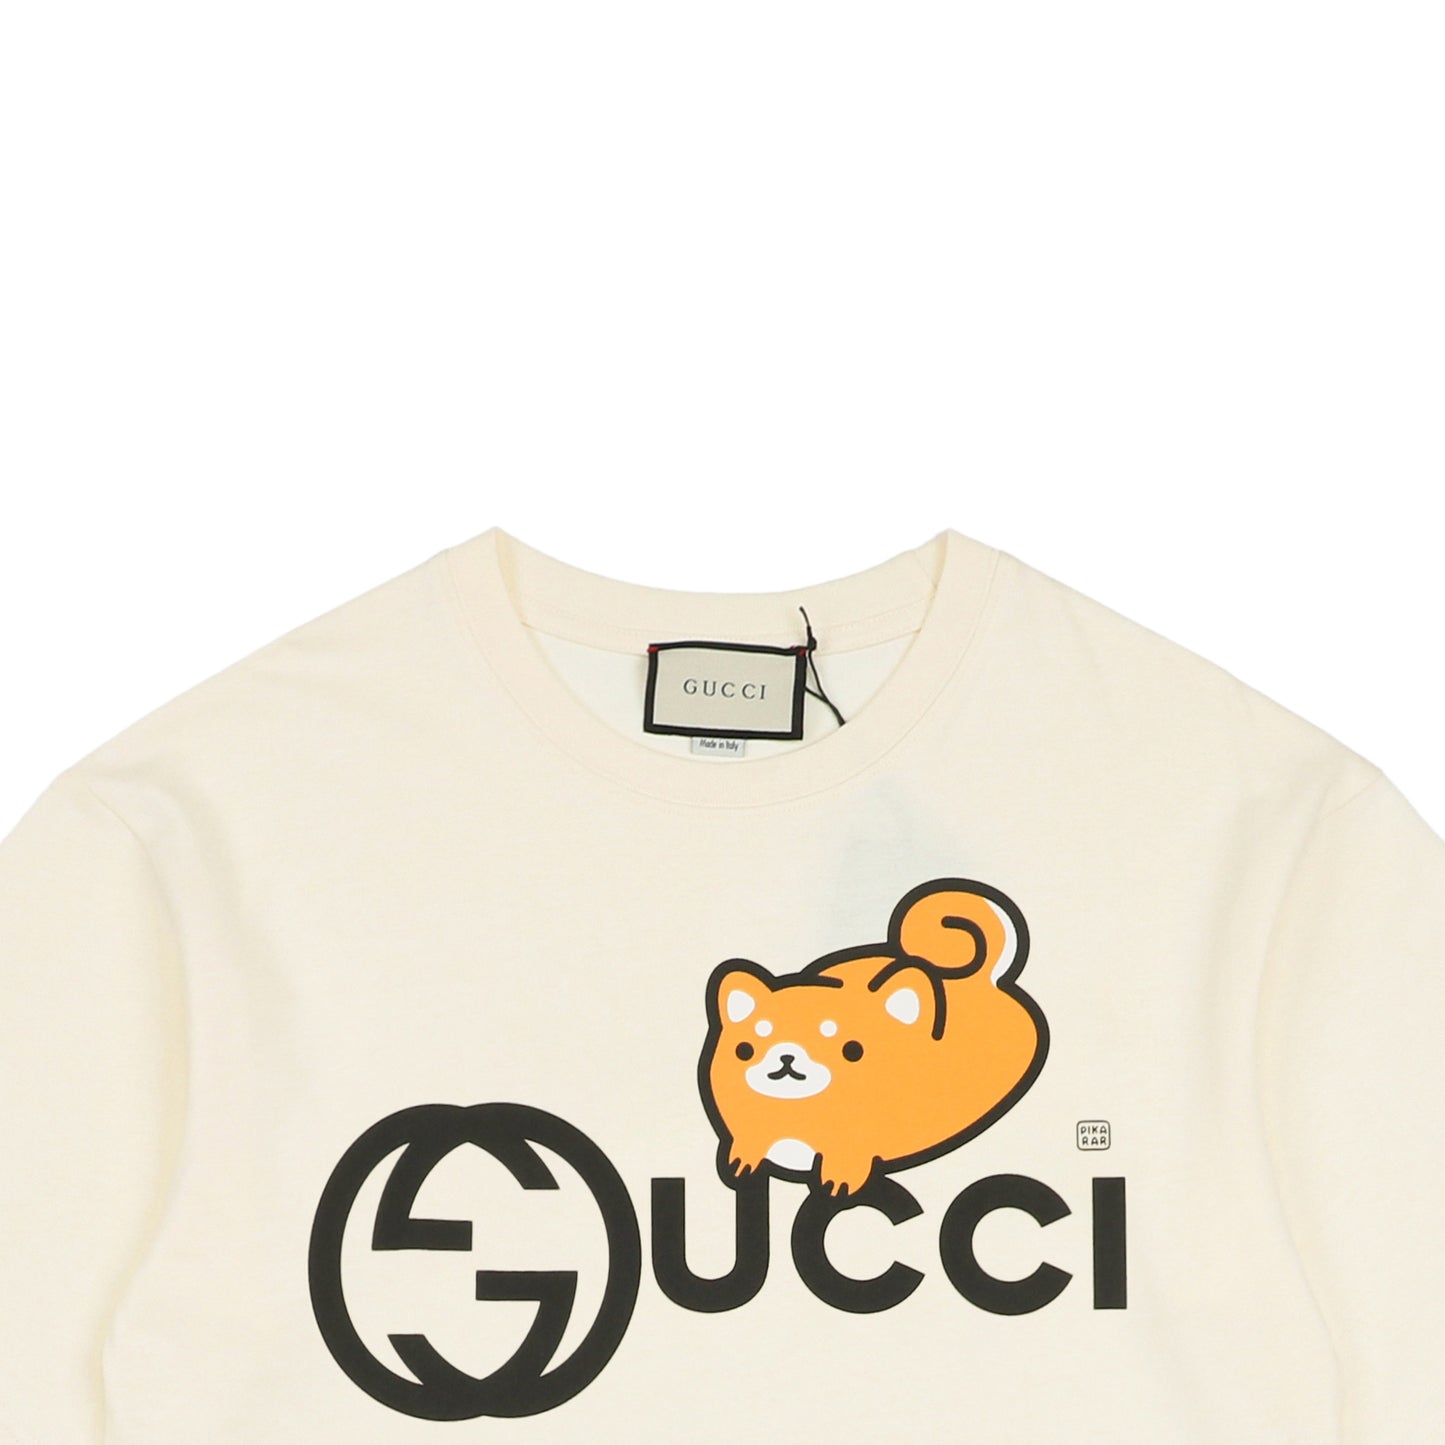 Gucc1 Animal Print Cotton T-Shirt